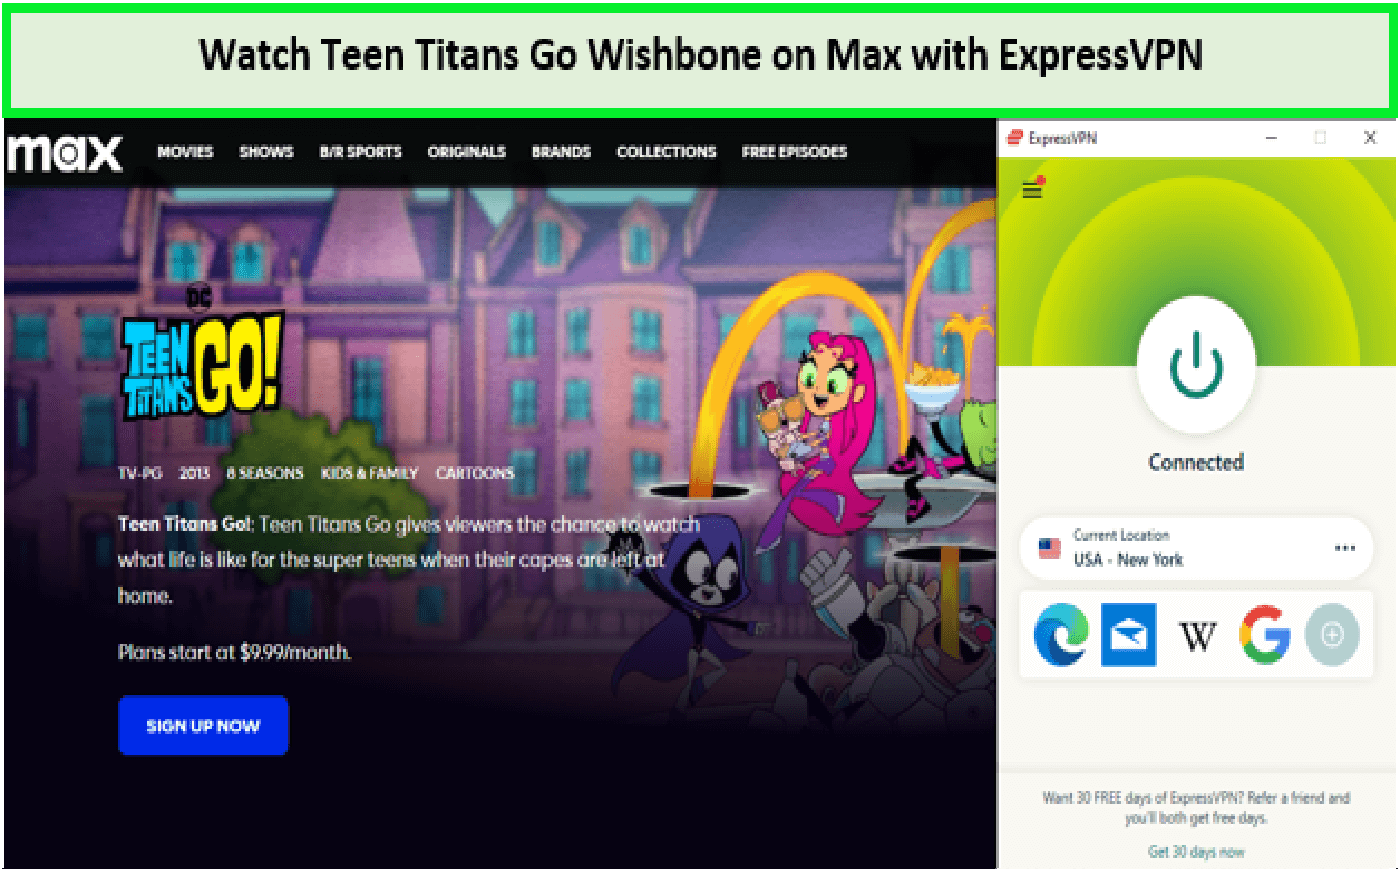 Watch-Teen-Titans-Go-Wishbone-in-UAE-on-Max-with-ExpressVPN